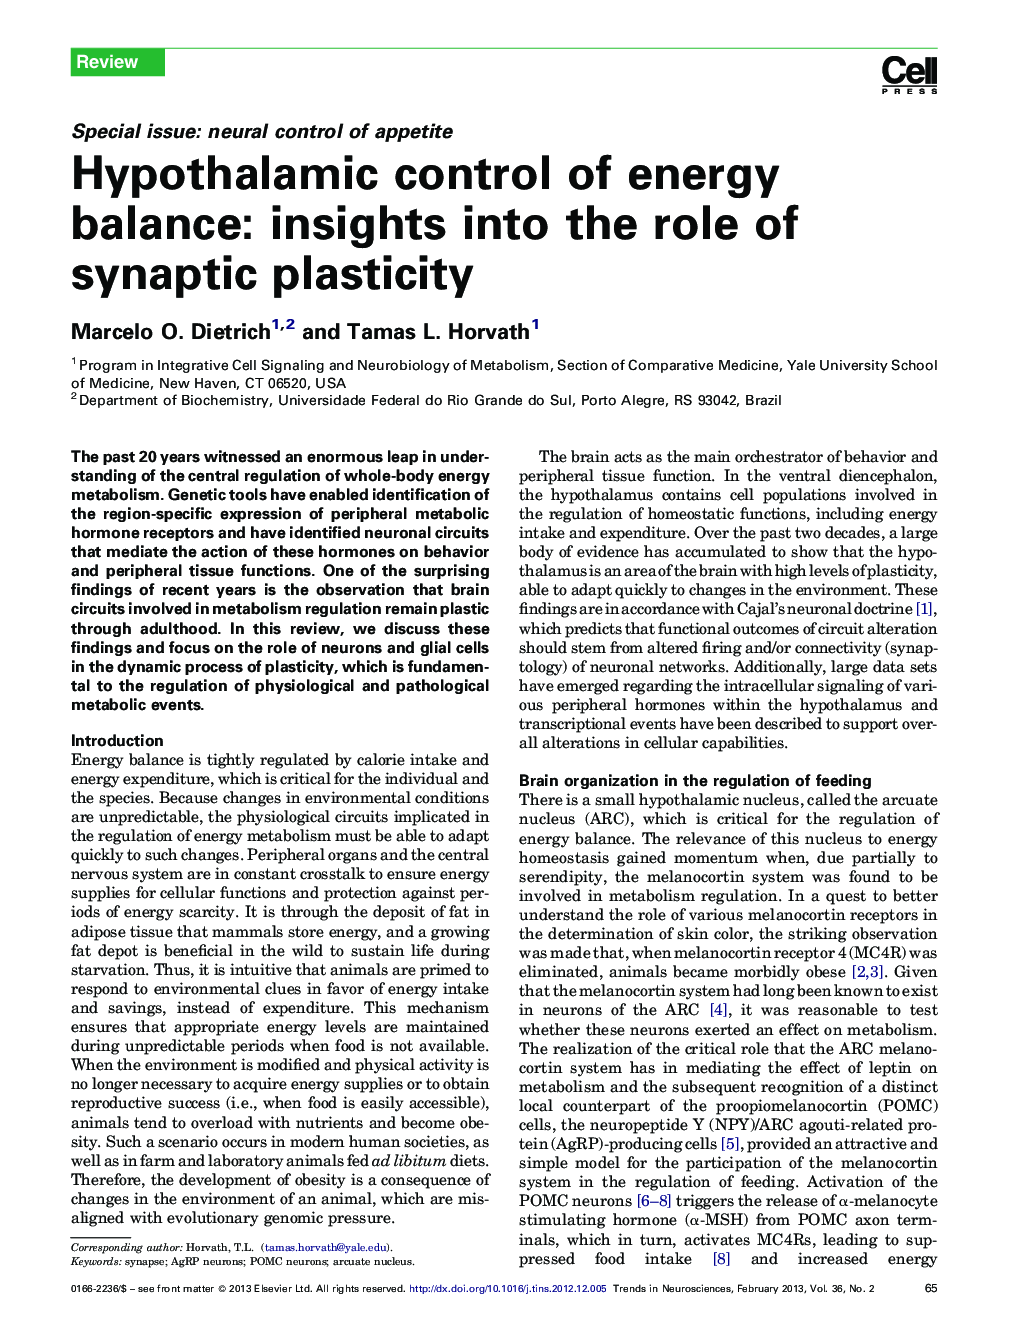 کنترل هیپوتالامیک تعادل انرژی: بینش نسبت به نقش پلاستیک سیناپسی 